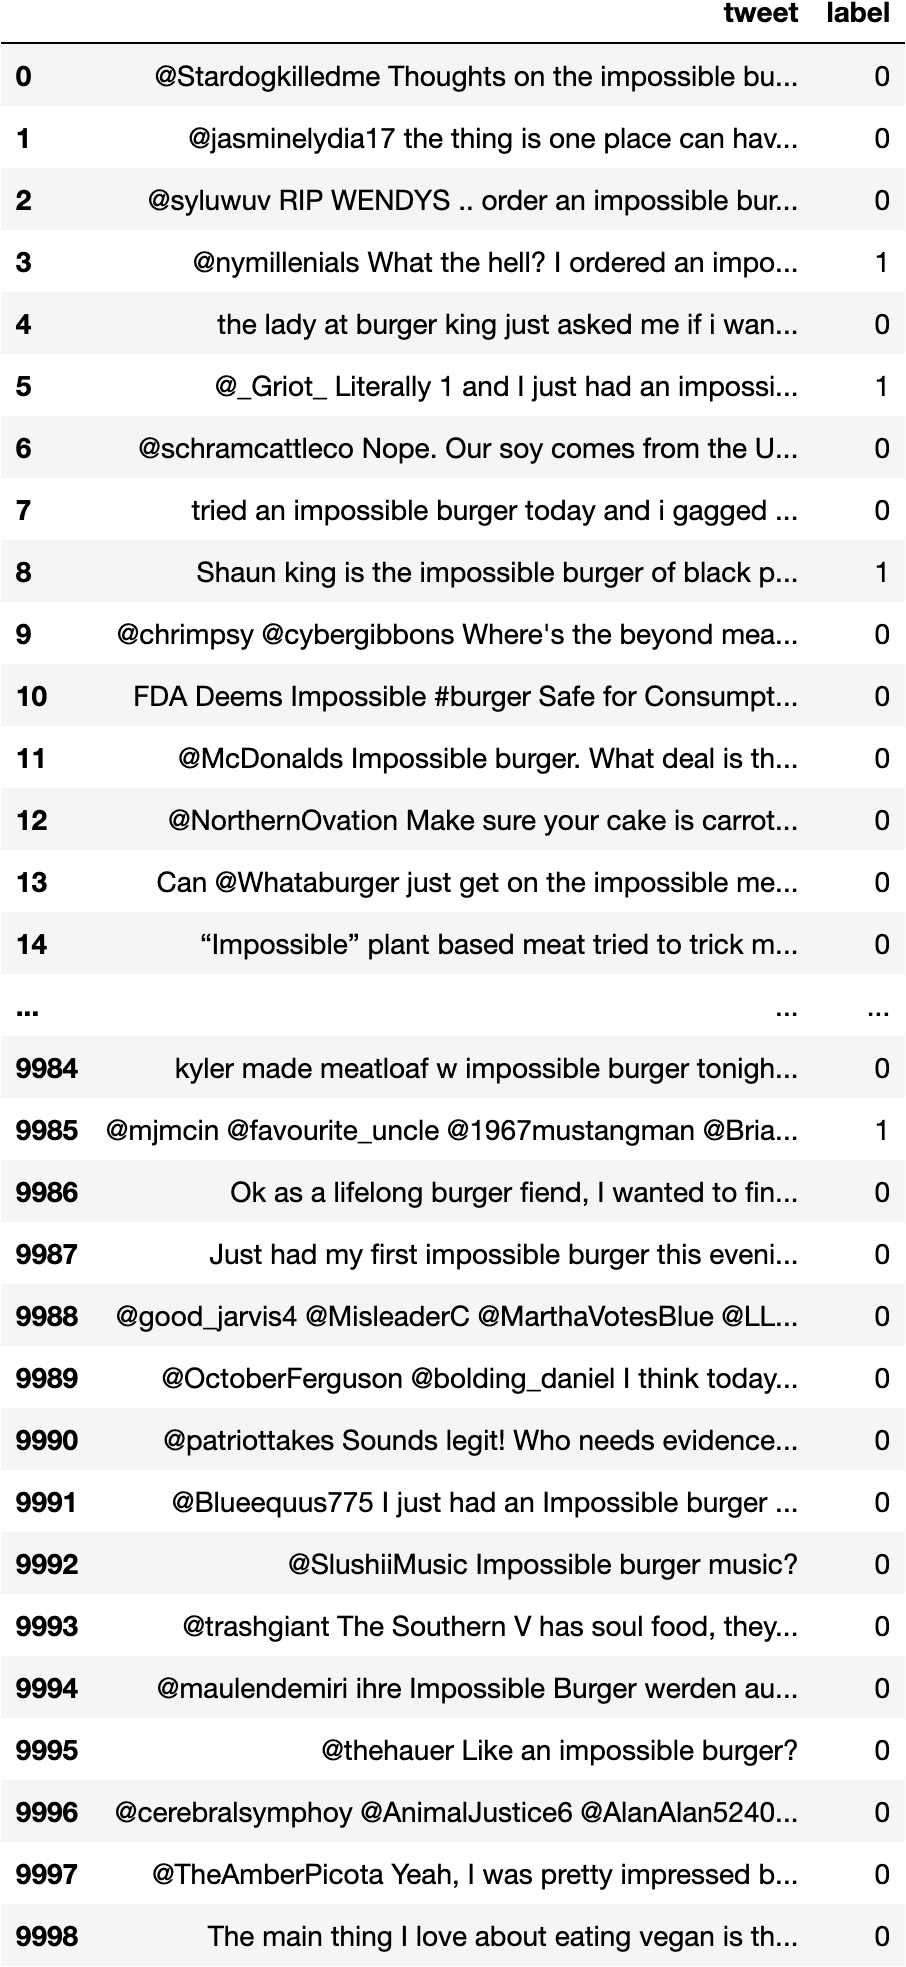 Dataframe for Impossible Burger Sentiment Predictions